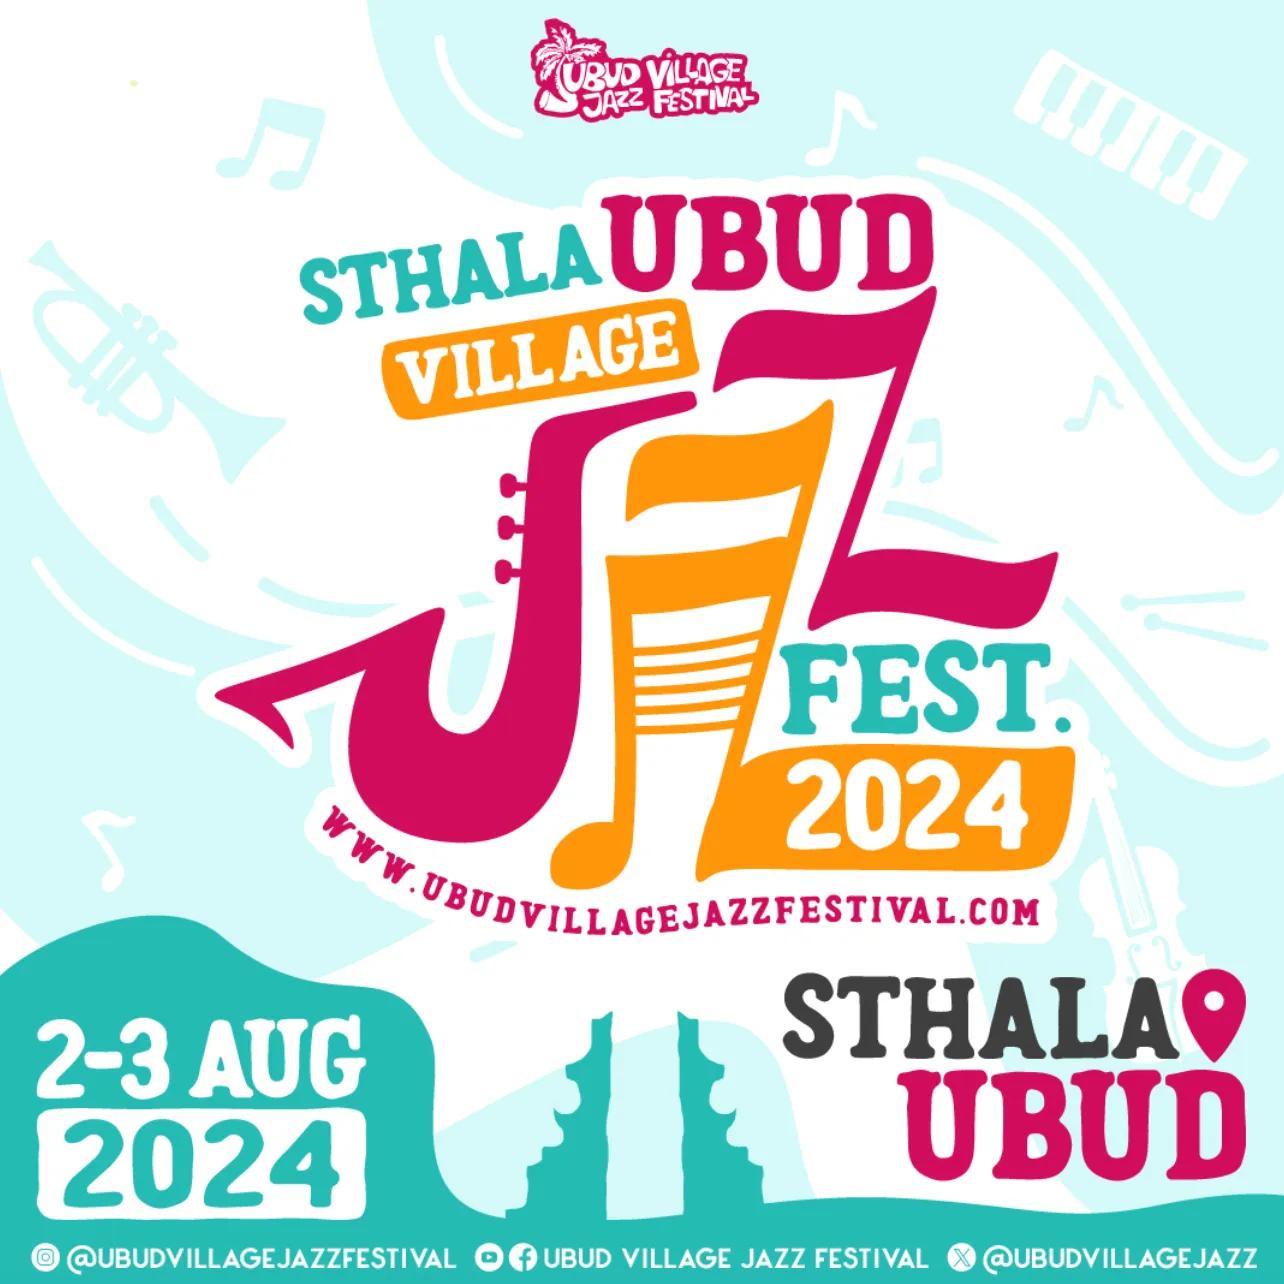 Event at Sthala everyday in 2024: Ubud Village Jazz Festival